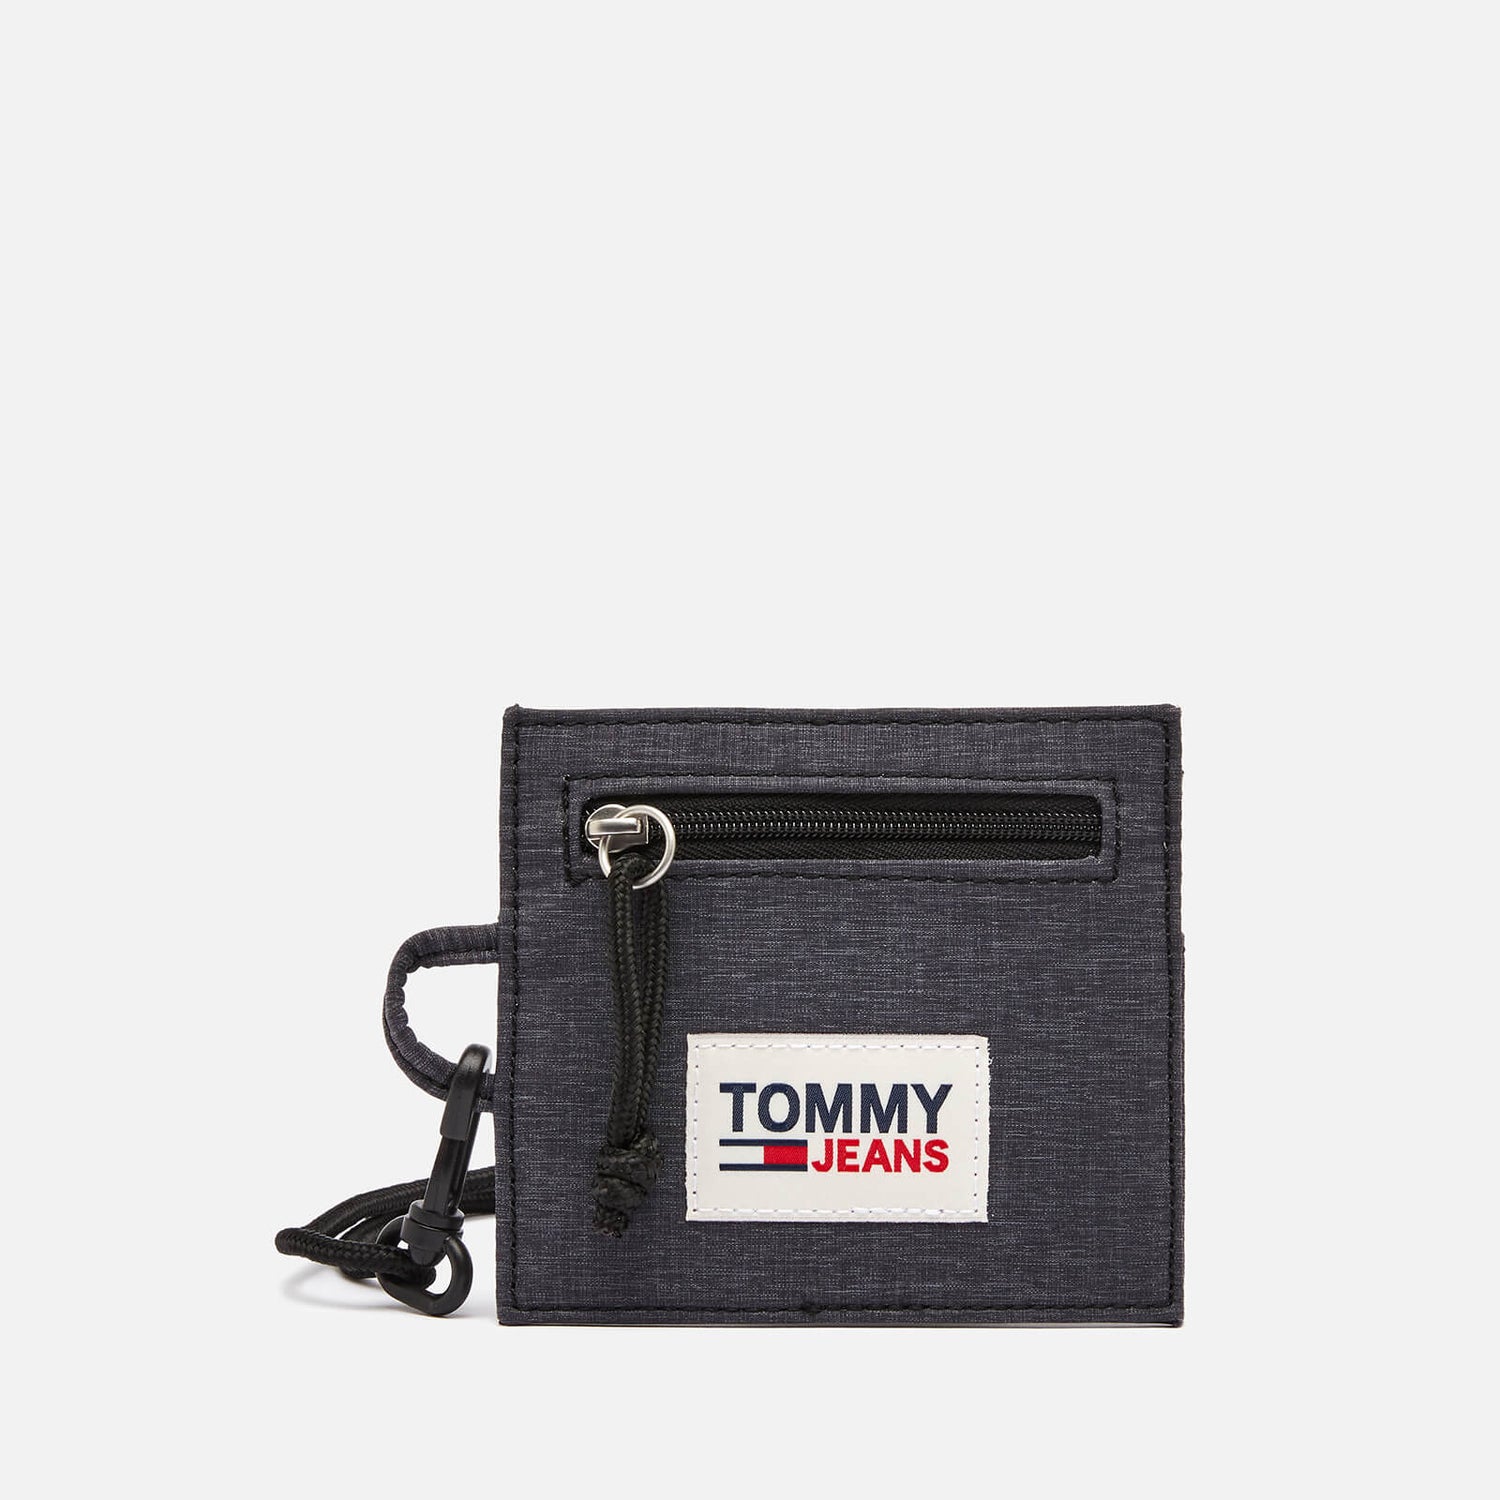 Tommy Jeans Men's College Tech Card Holder - Black